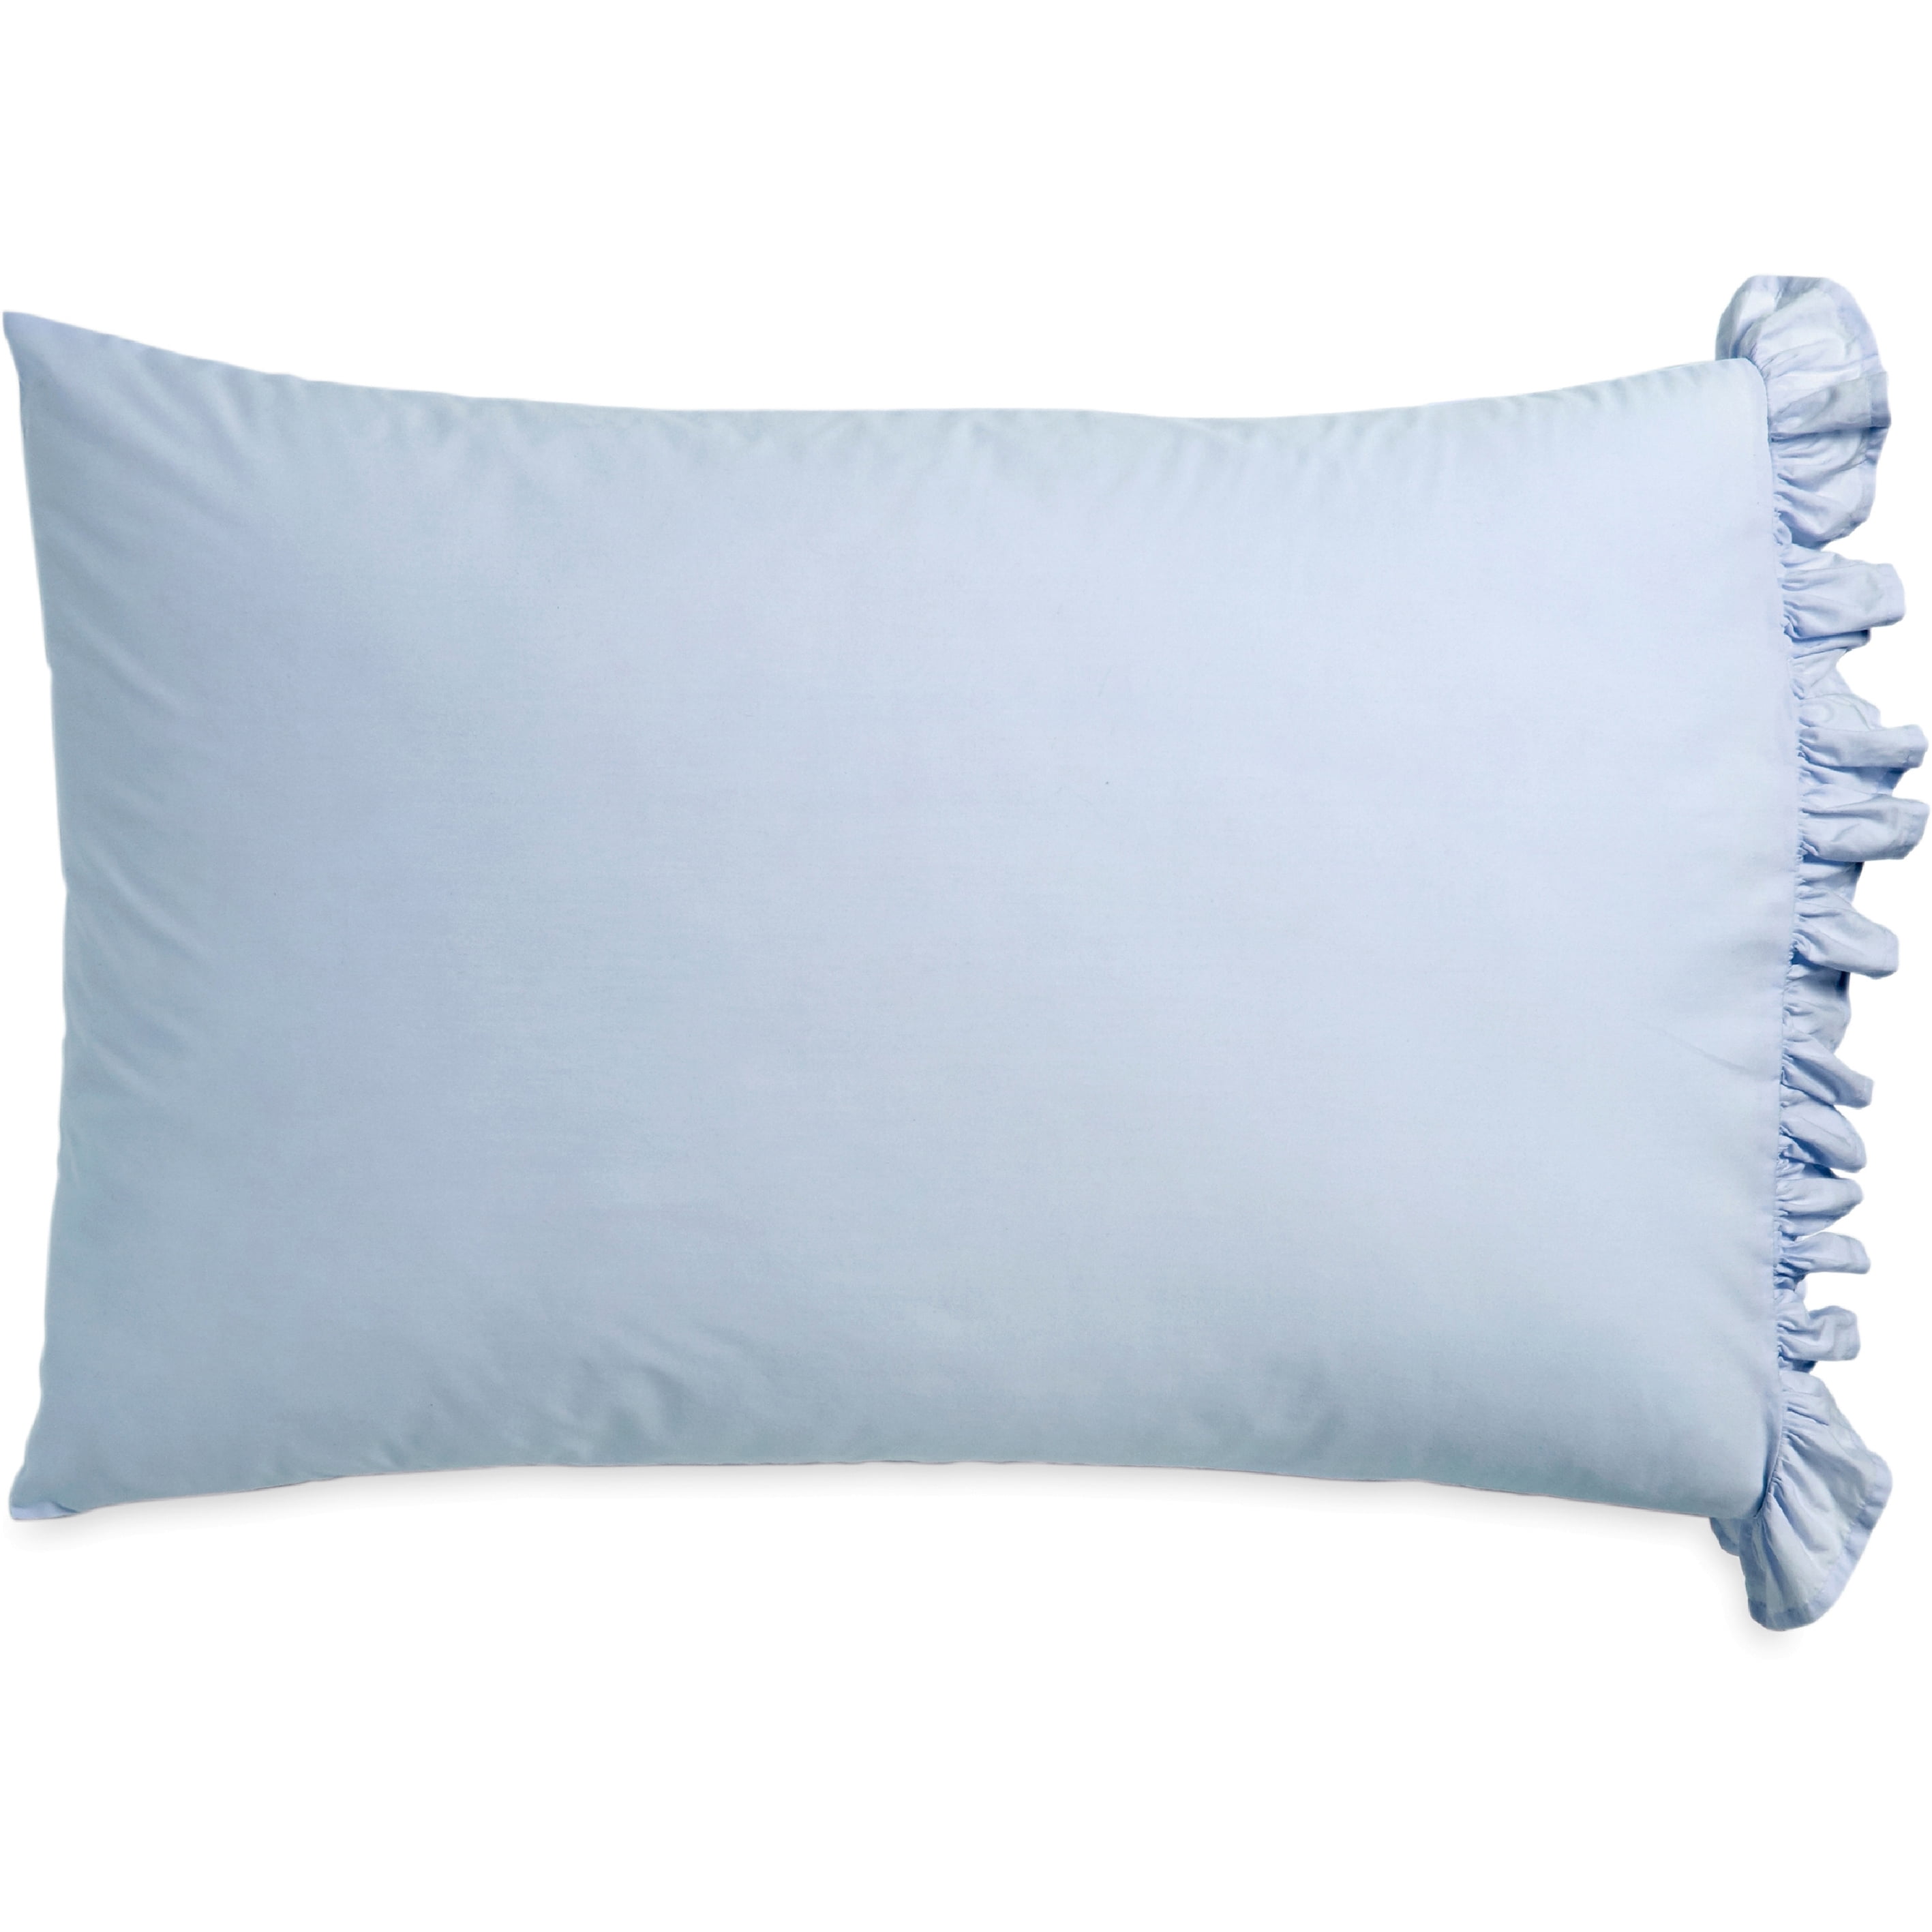 Pioneer Woman Solid Ruffle Pillowcase 